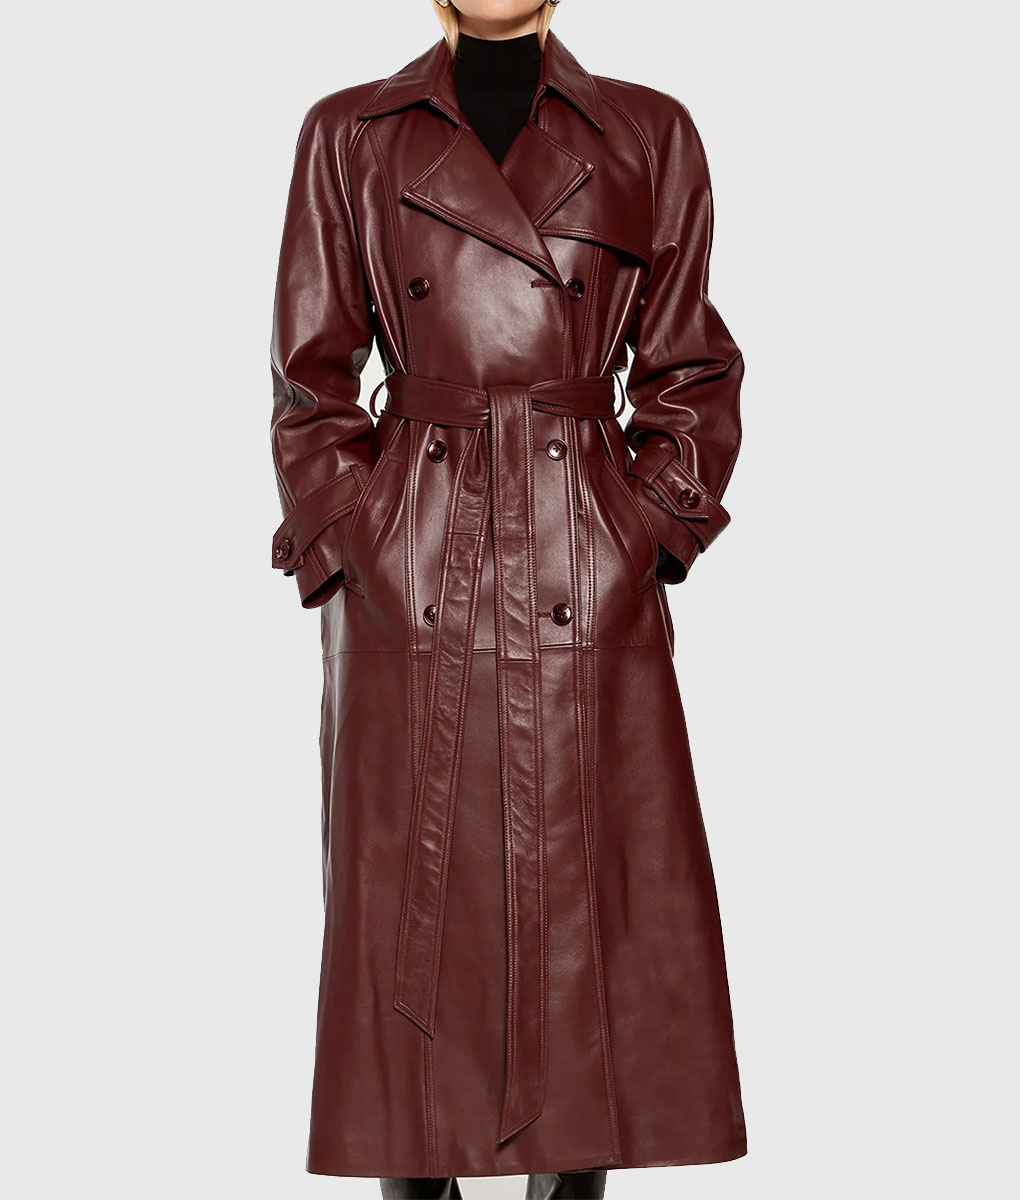 Selena Gomez Knicks Game Maroon Leather Coat (2)